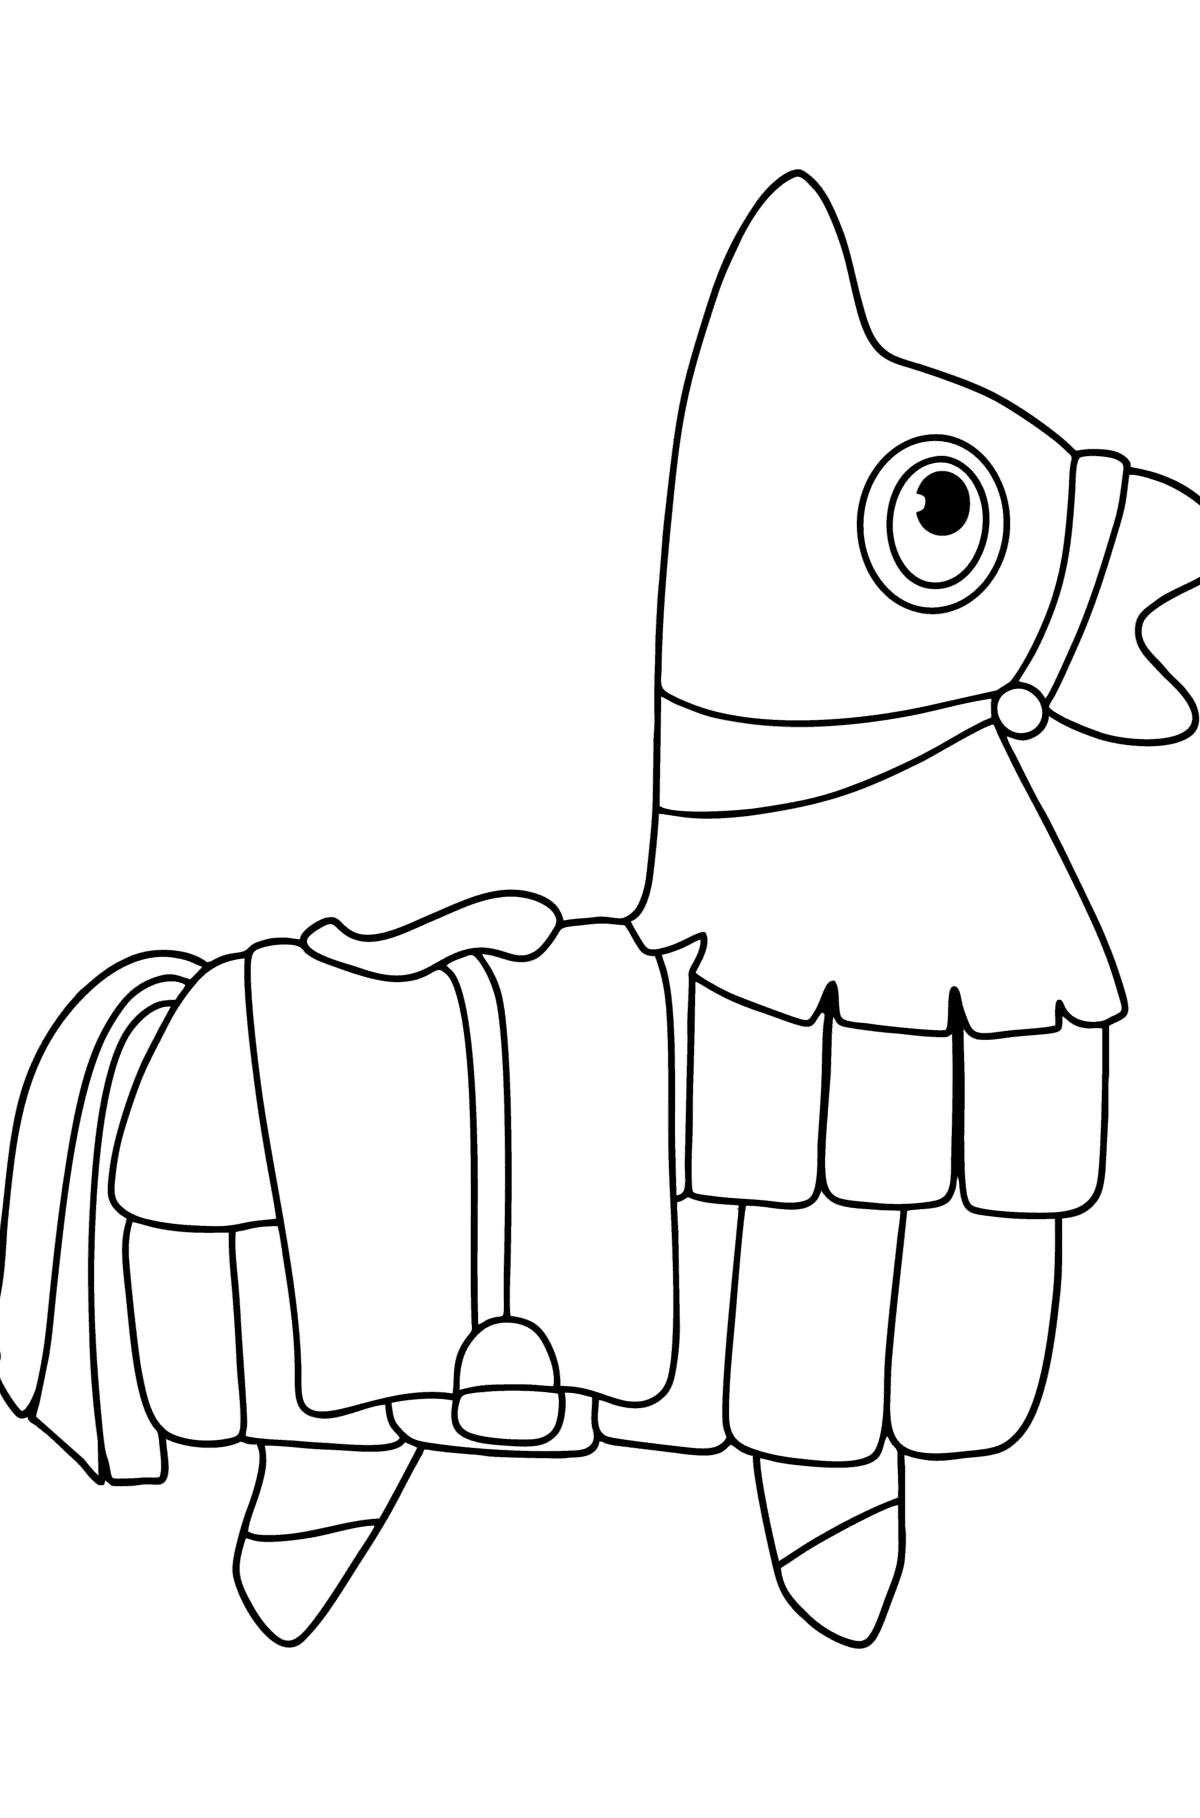 Розмальовка Fortnite Llama - Розмальовки для дітей